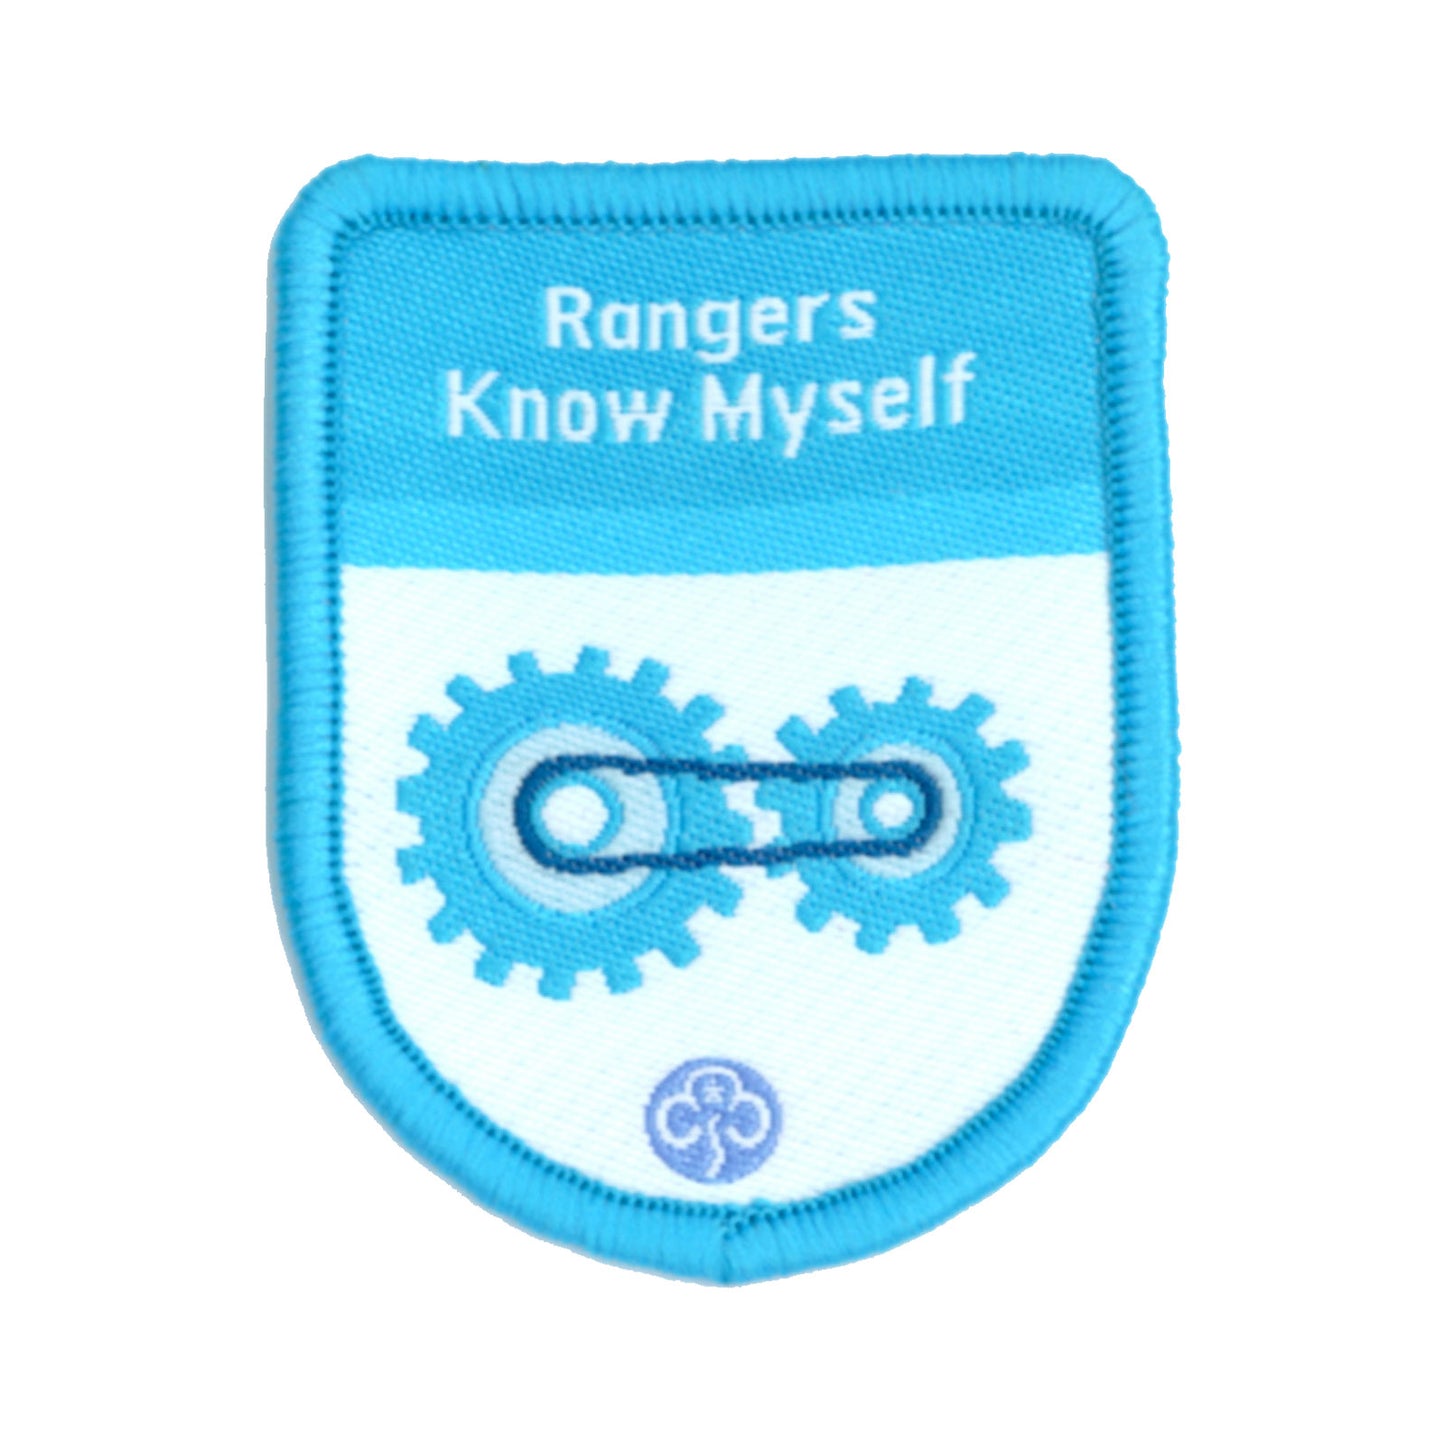 Rangers Know Myself Theme Award Woven Badge